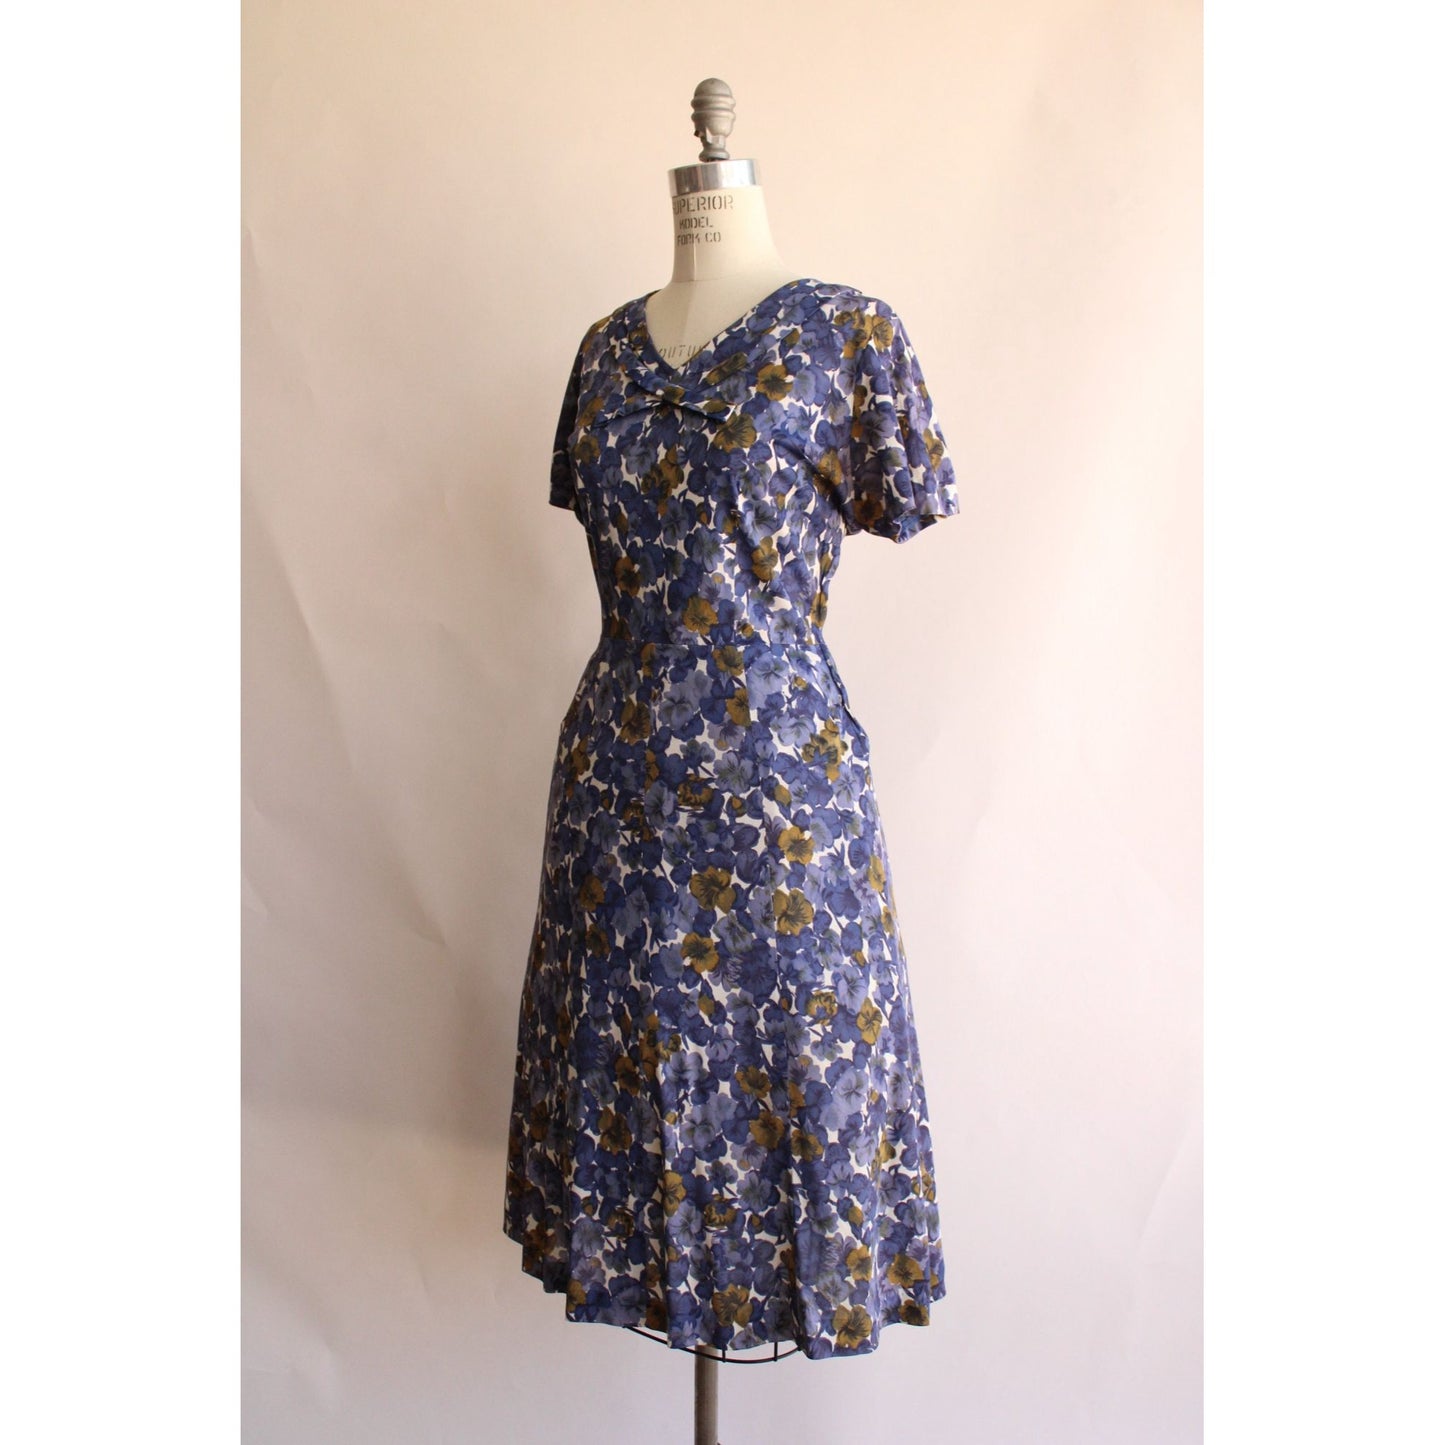 Vintage 1940s 1950s Blue and Brown Floral Print Dress